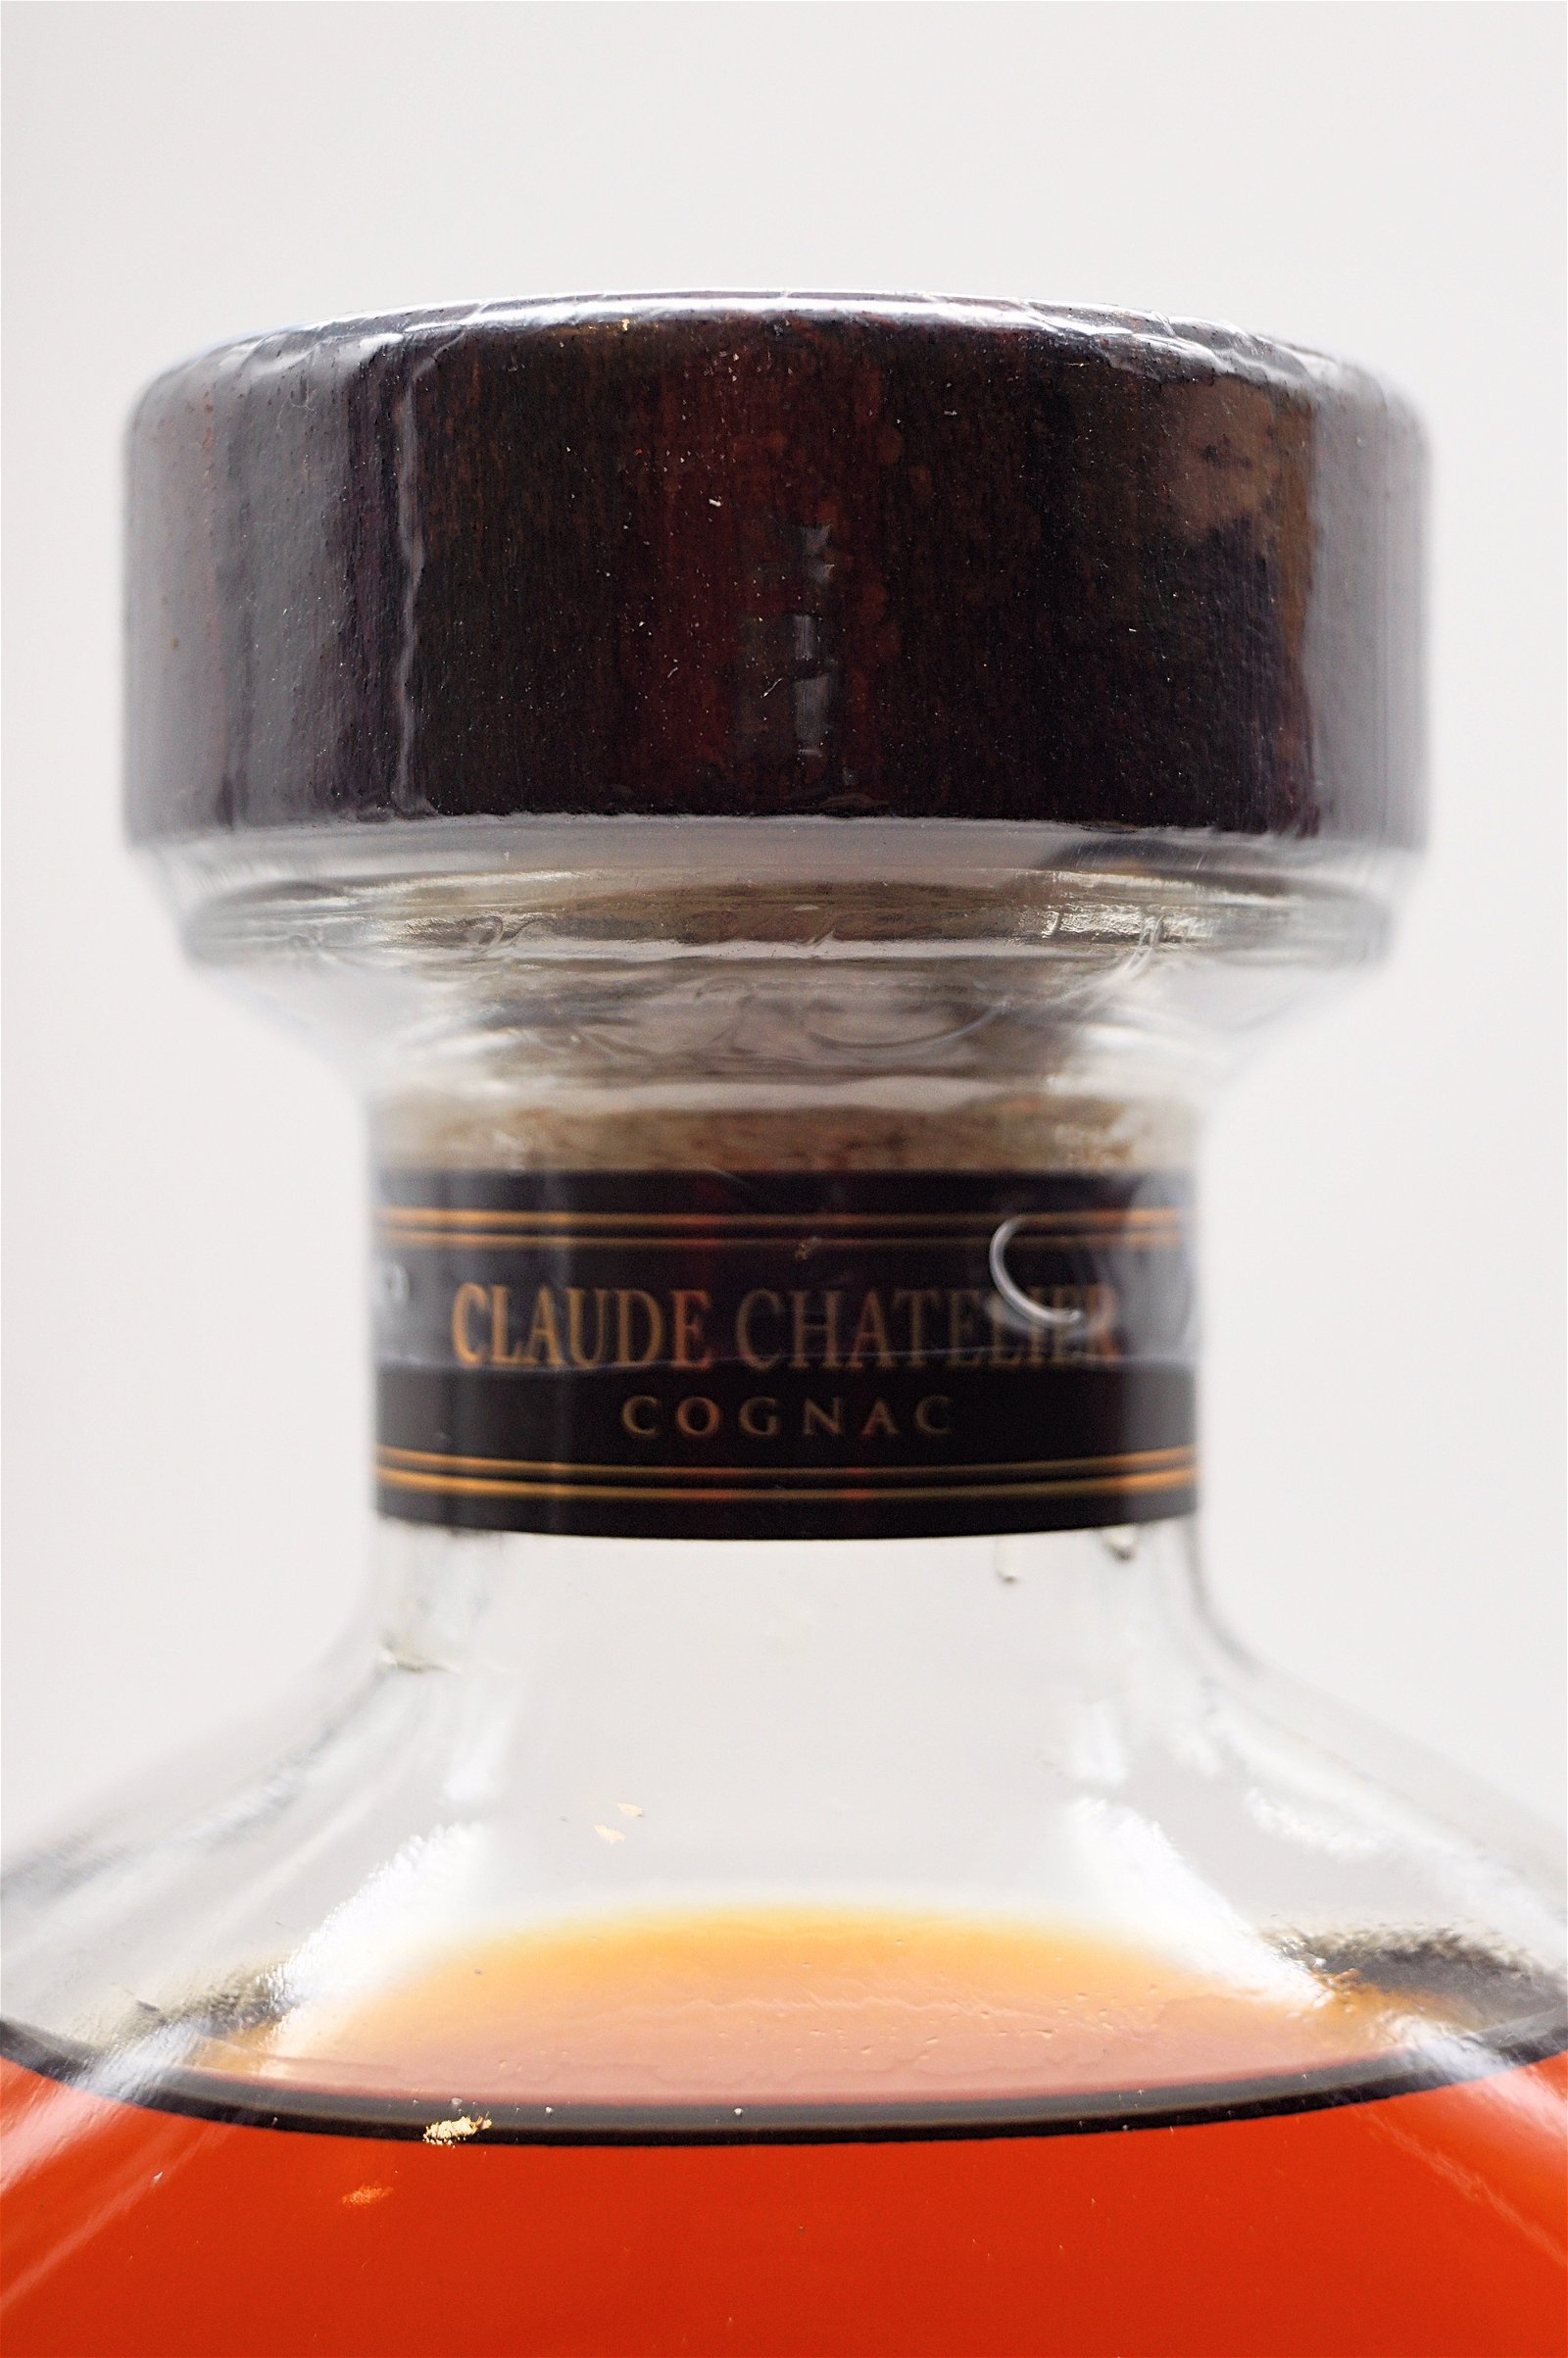 Claude Chatelier XO Extra Fine Cognac